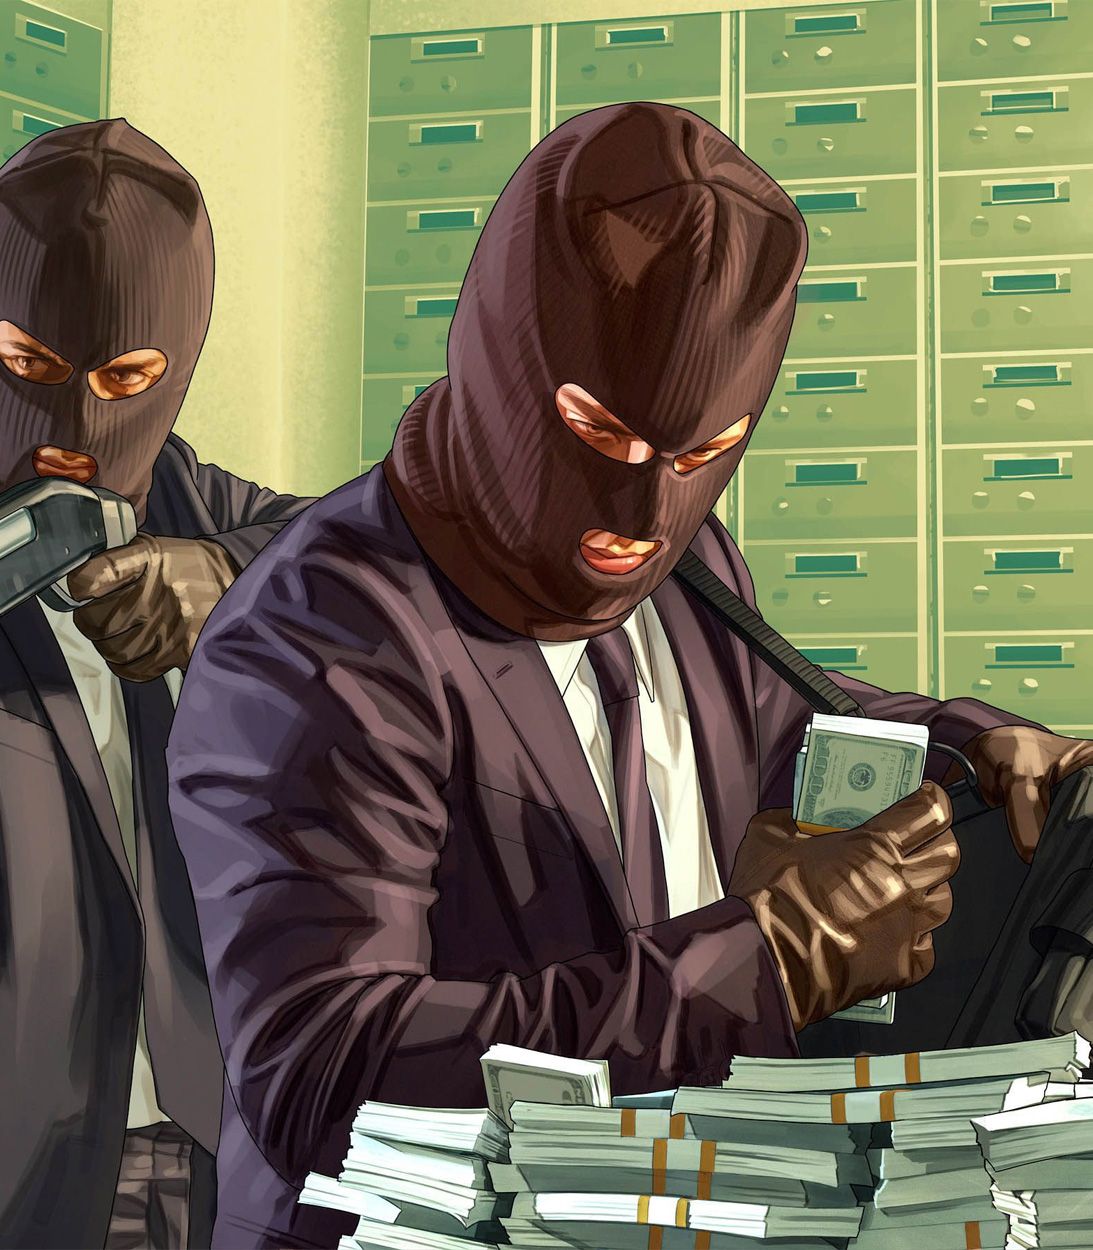 TLDR GTA Online Bank Robbery